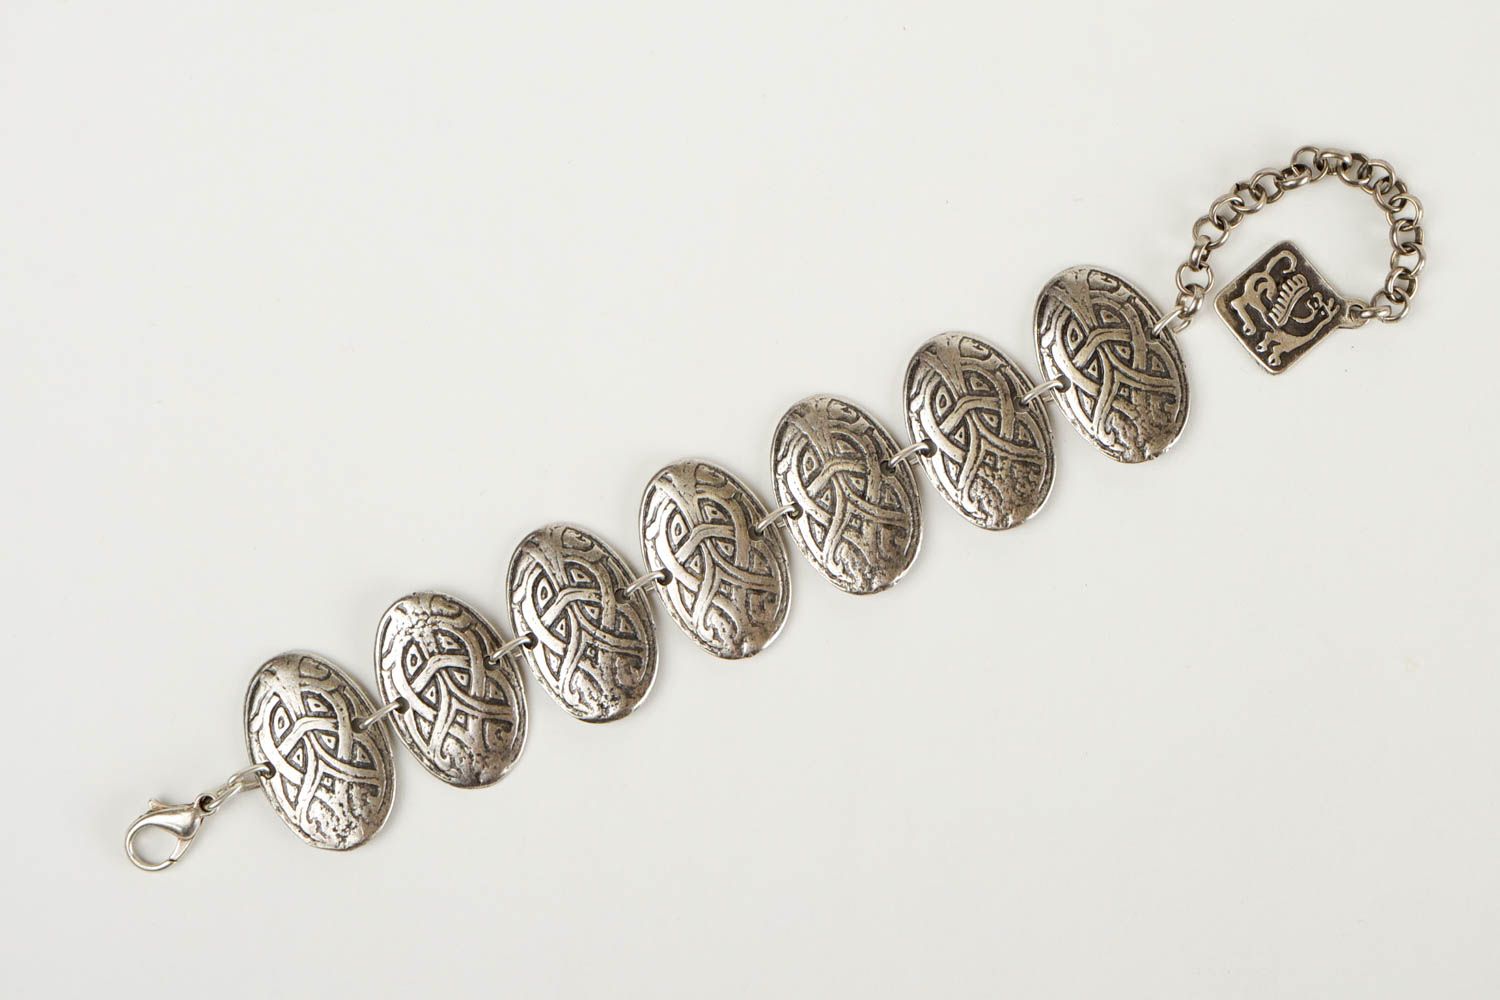 Unusual handmade wrist bracelet metal bracelet designs fashion tips gift ideas photo 3